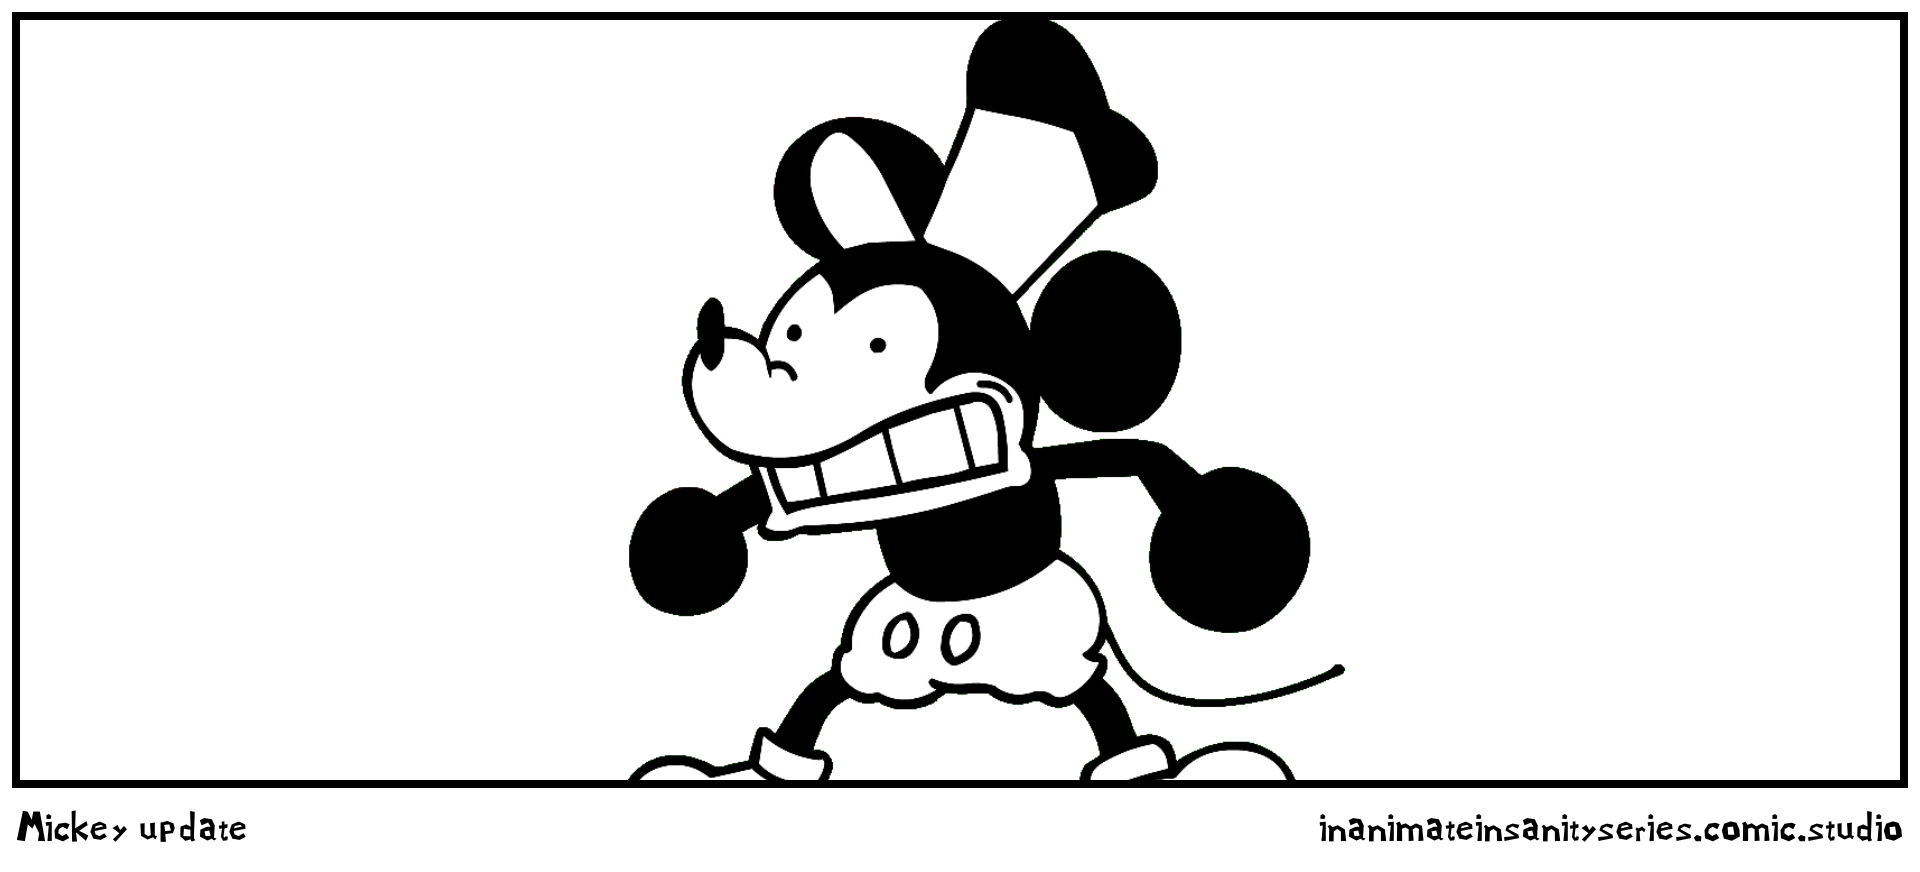 Mickey update